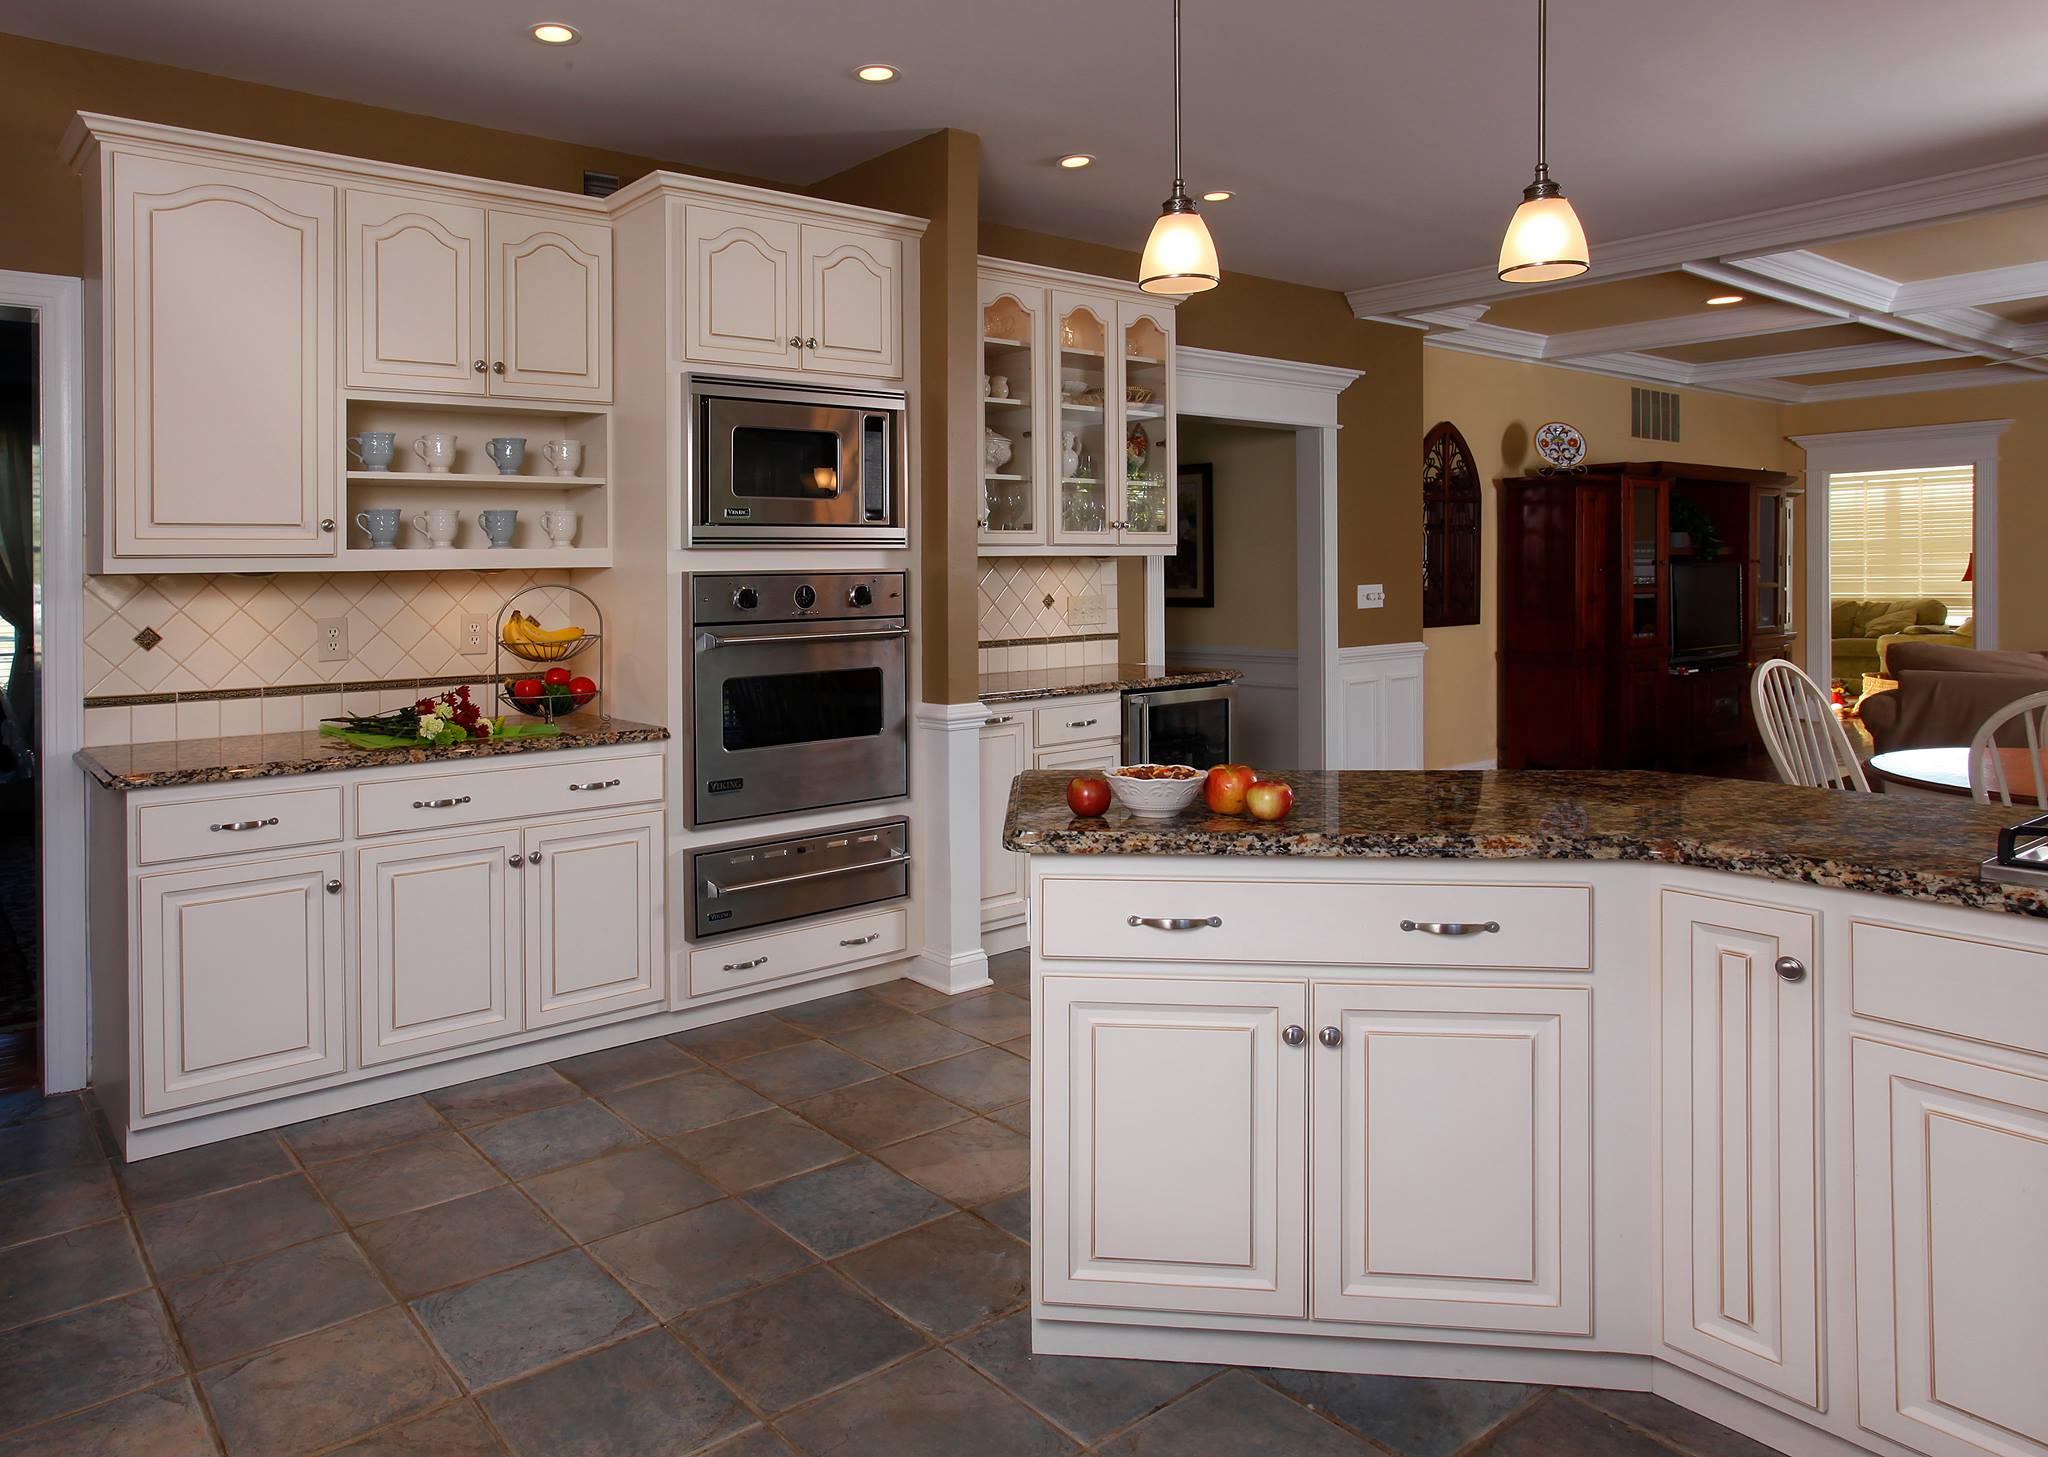 Minimalist White Cabinet Kitchen with Simple Decor